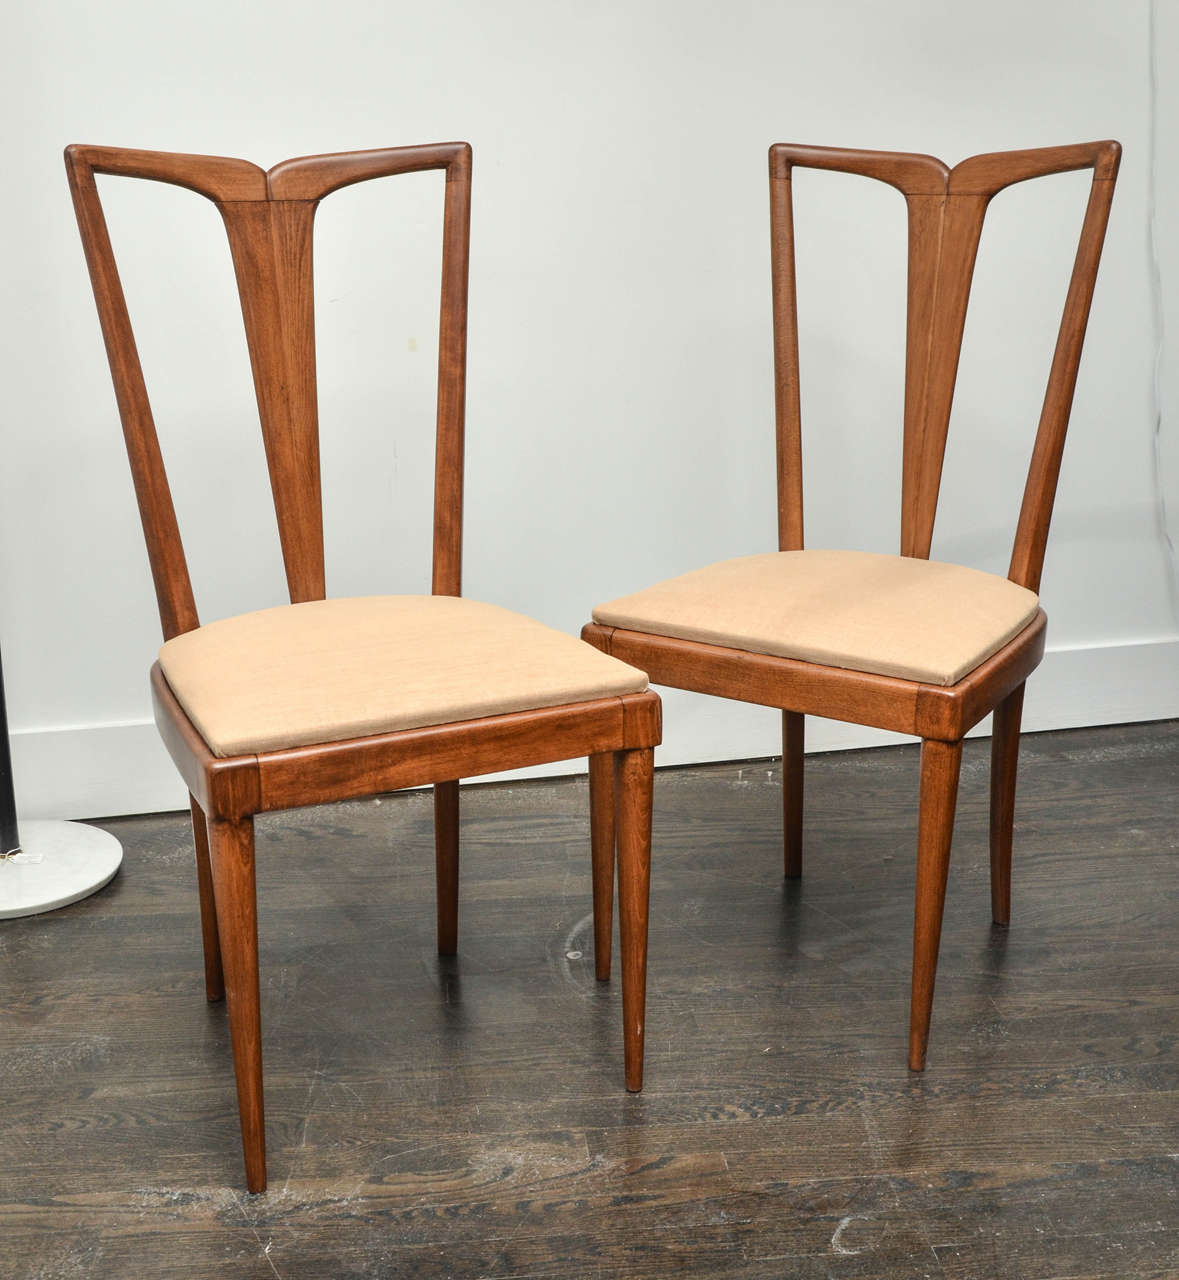 Set of eight dining chairs by Osvaldo Borsani.
Fully restored.